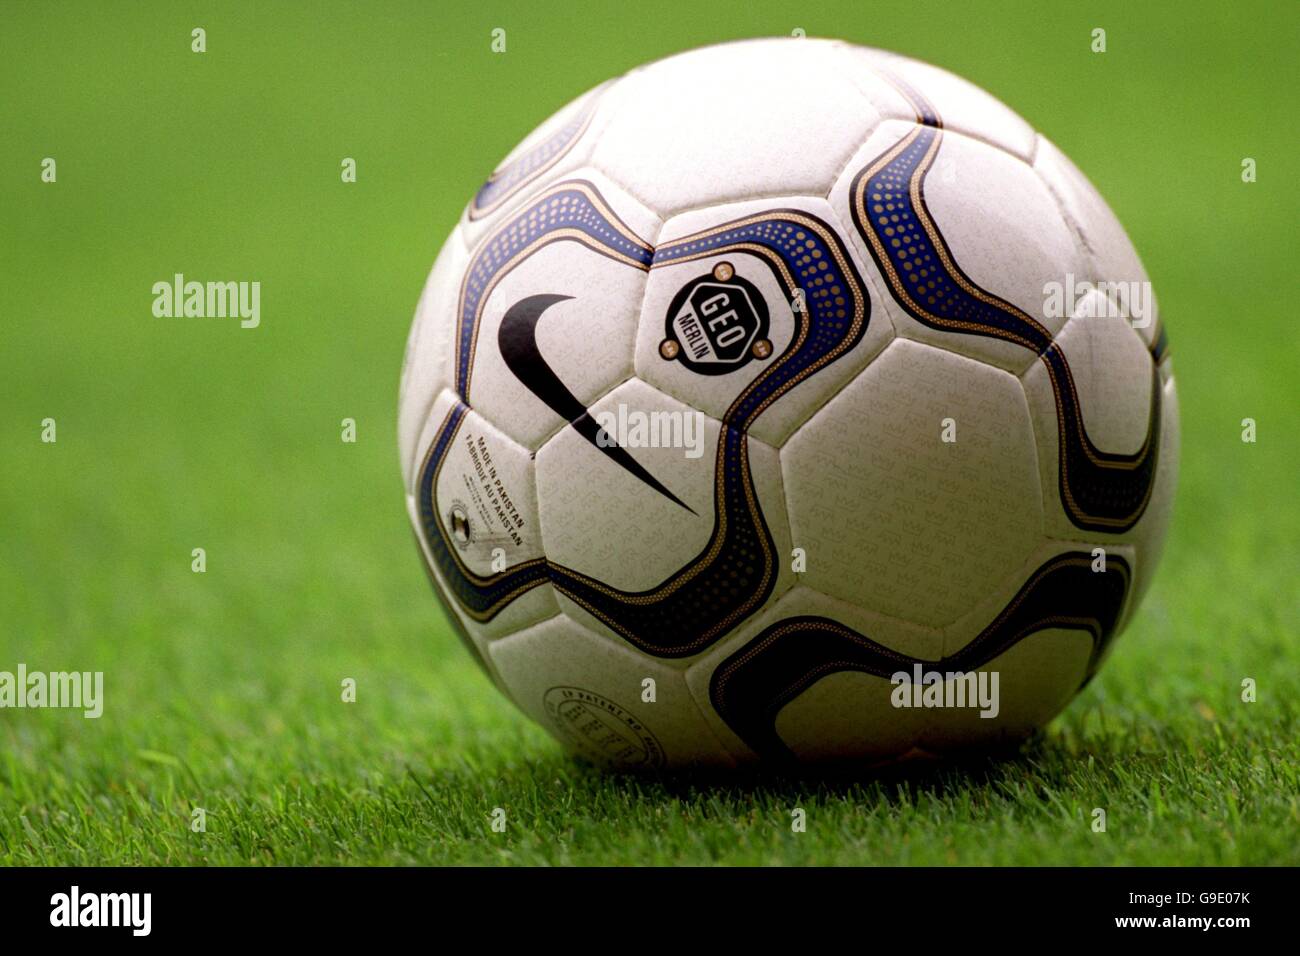 Soccer - FA Carling Premiership - Manchester United v Sunderland. The new Nike Geo football Stock Photo